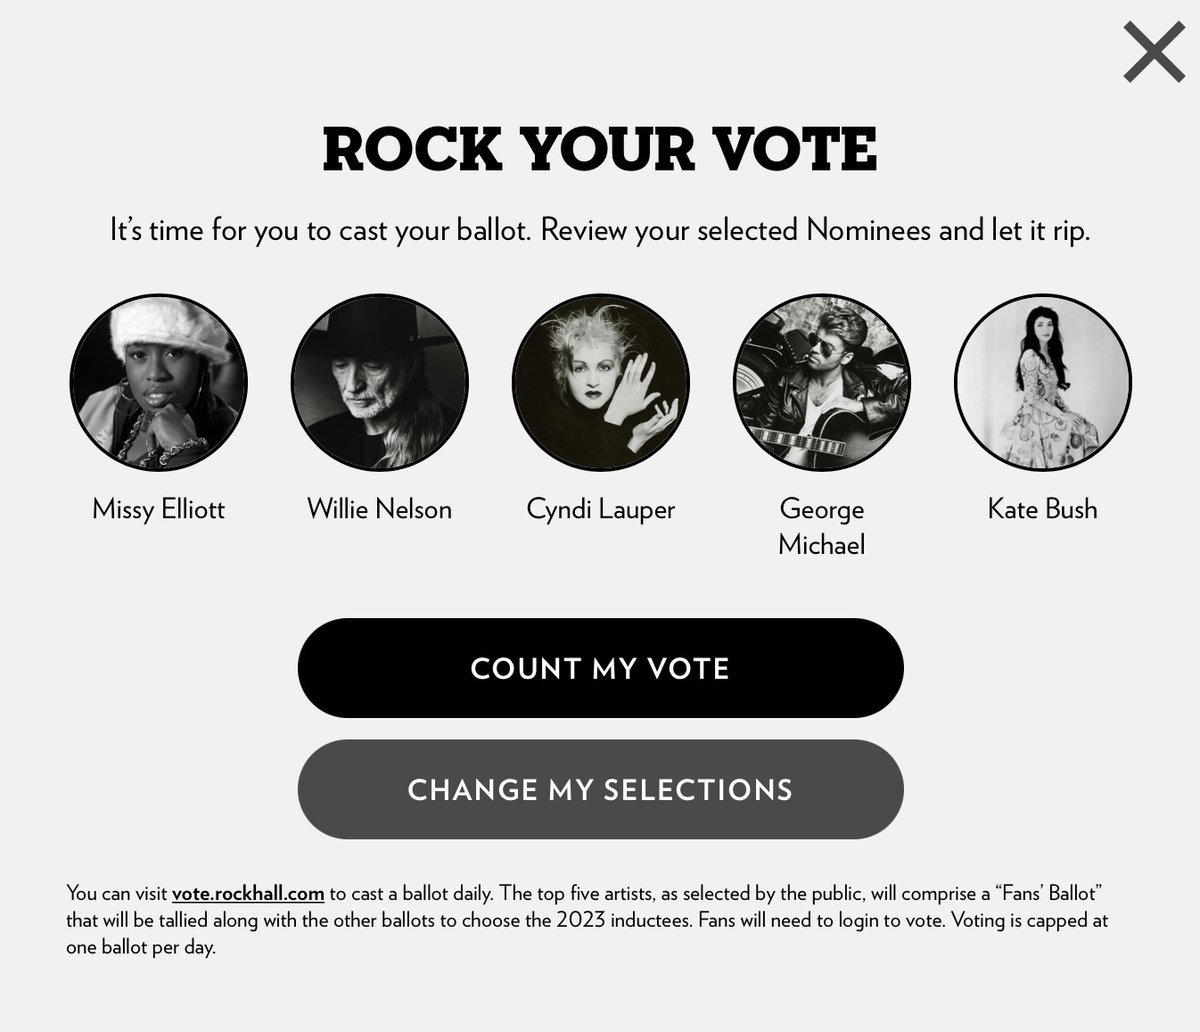 @MissyElliott @rockhall Congrats, legend! You’ve got our vote! ❤️
- Joshua & Robert 
#MissyElliott #RockYourVote #BlackHistoryMonth #BHM #BlackExcellence